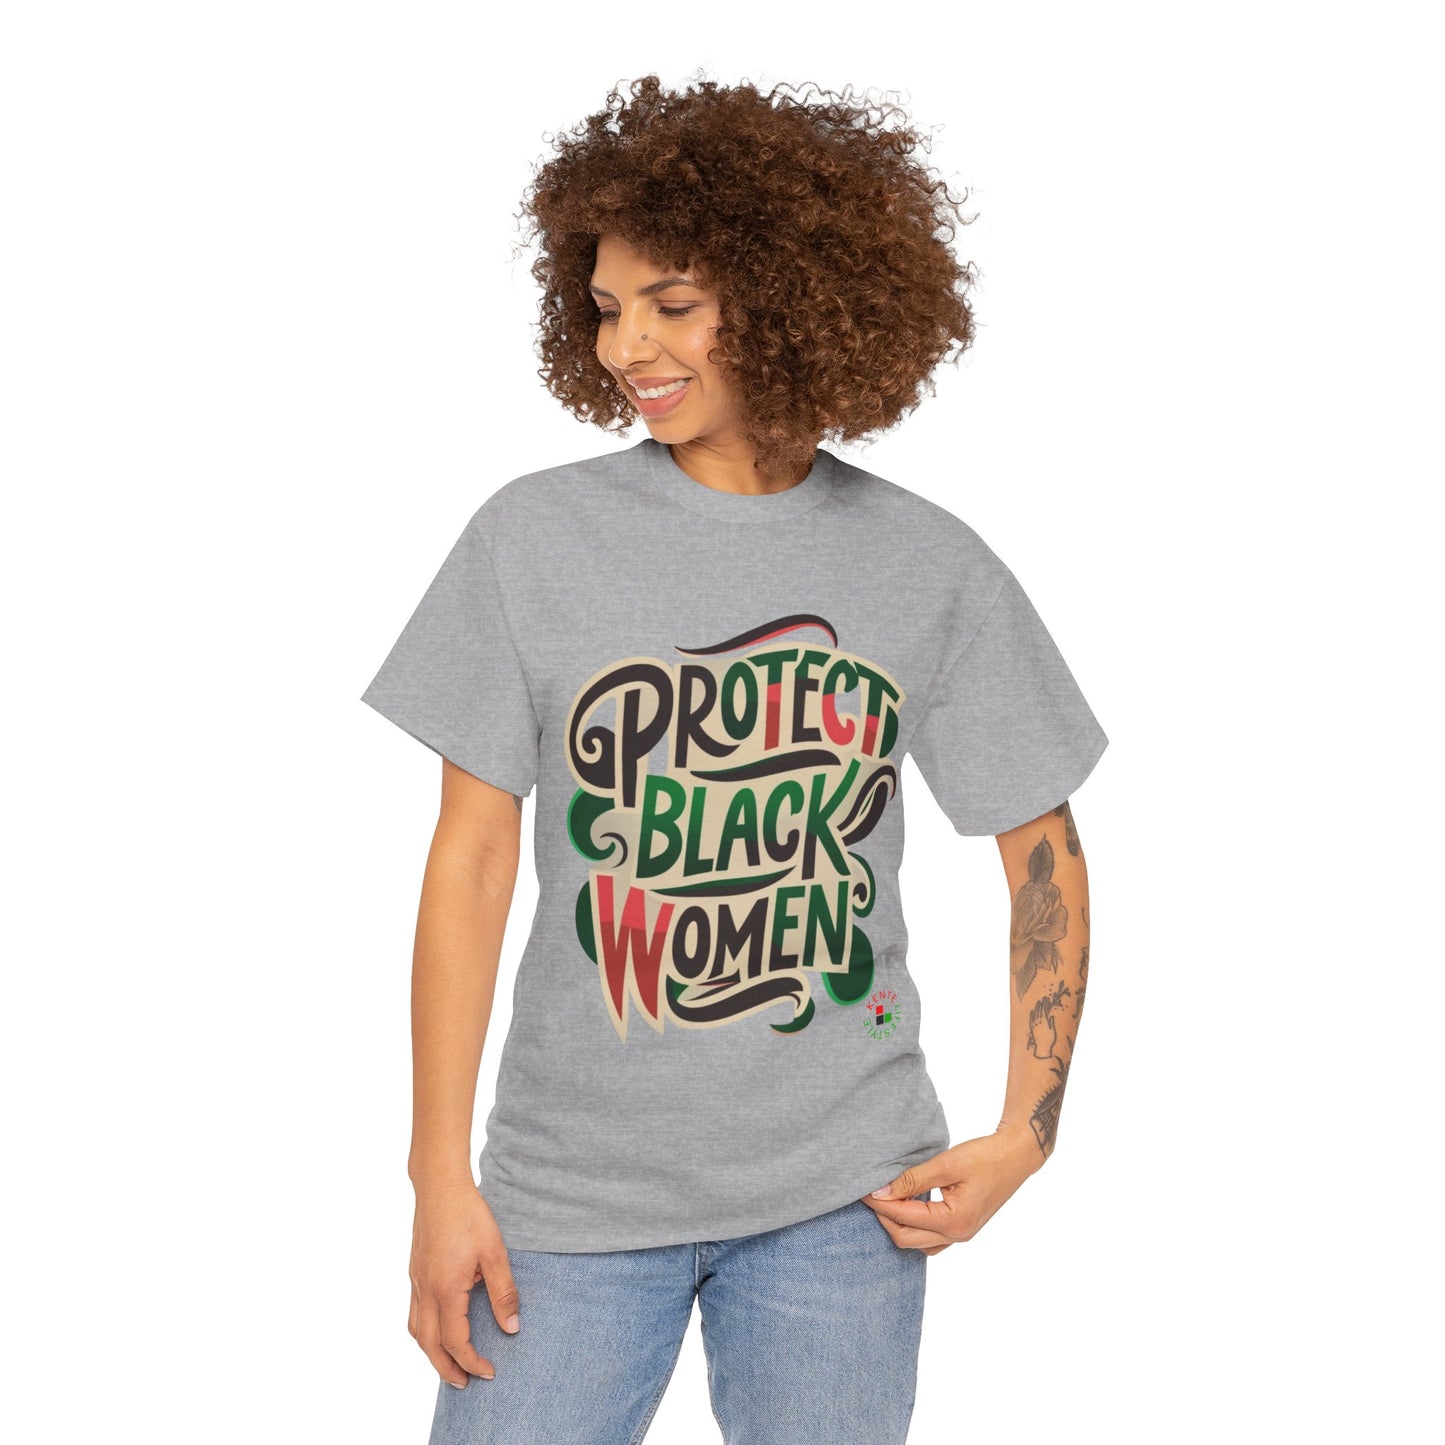 Protect Black Women - T-shirt